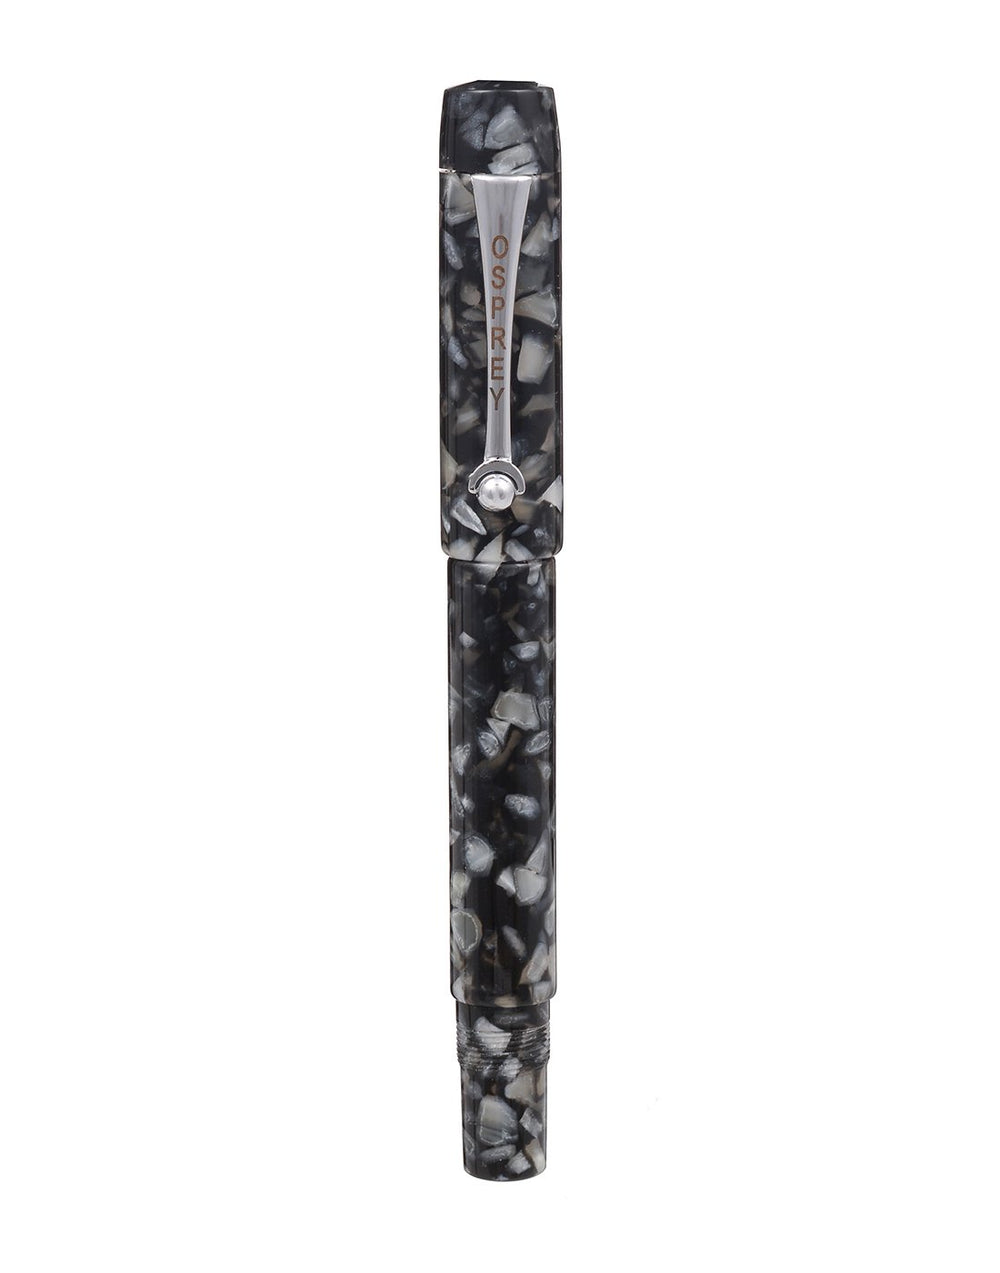 OSPREY PENS - MILANO Fountain Pen "Chiaroscuro" With Standard And Flex Nib Options - Buchan's Kerrisdale Stationery